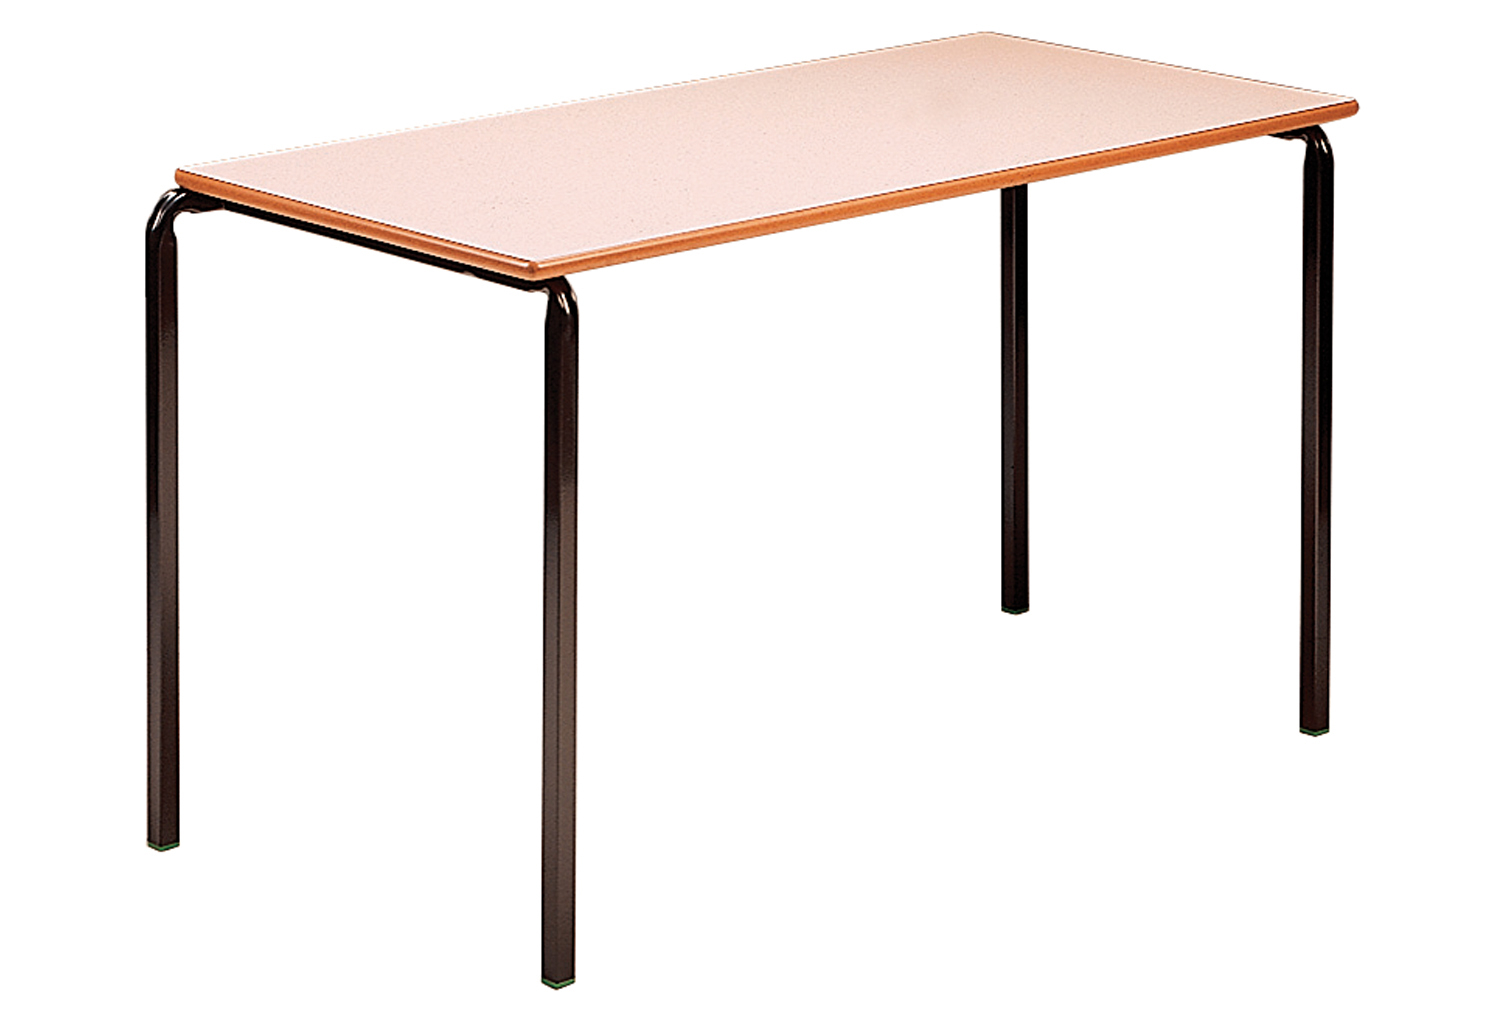 Qty 4 - Rectangular Crush Bent Classroom Tables 8-11 Years, 110wx55dx64h (cm), Charcoal Frame, Beech Top, MDF Beech Edge